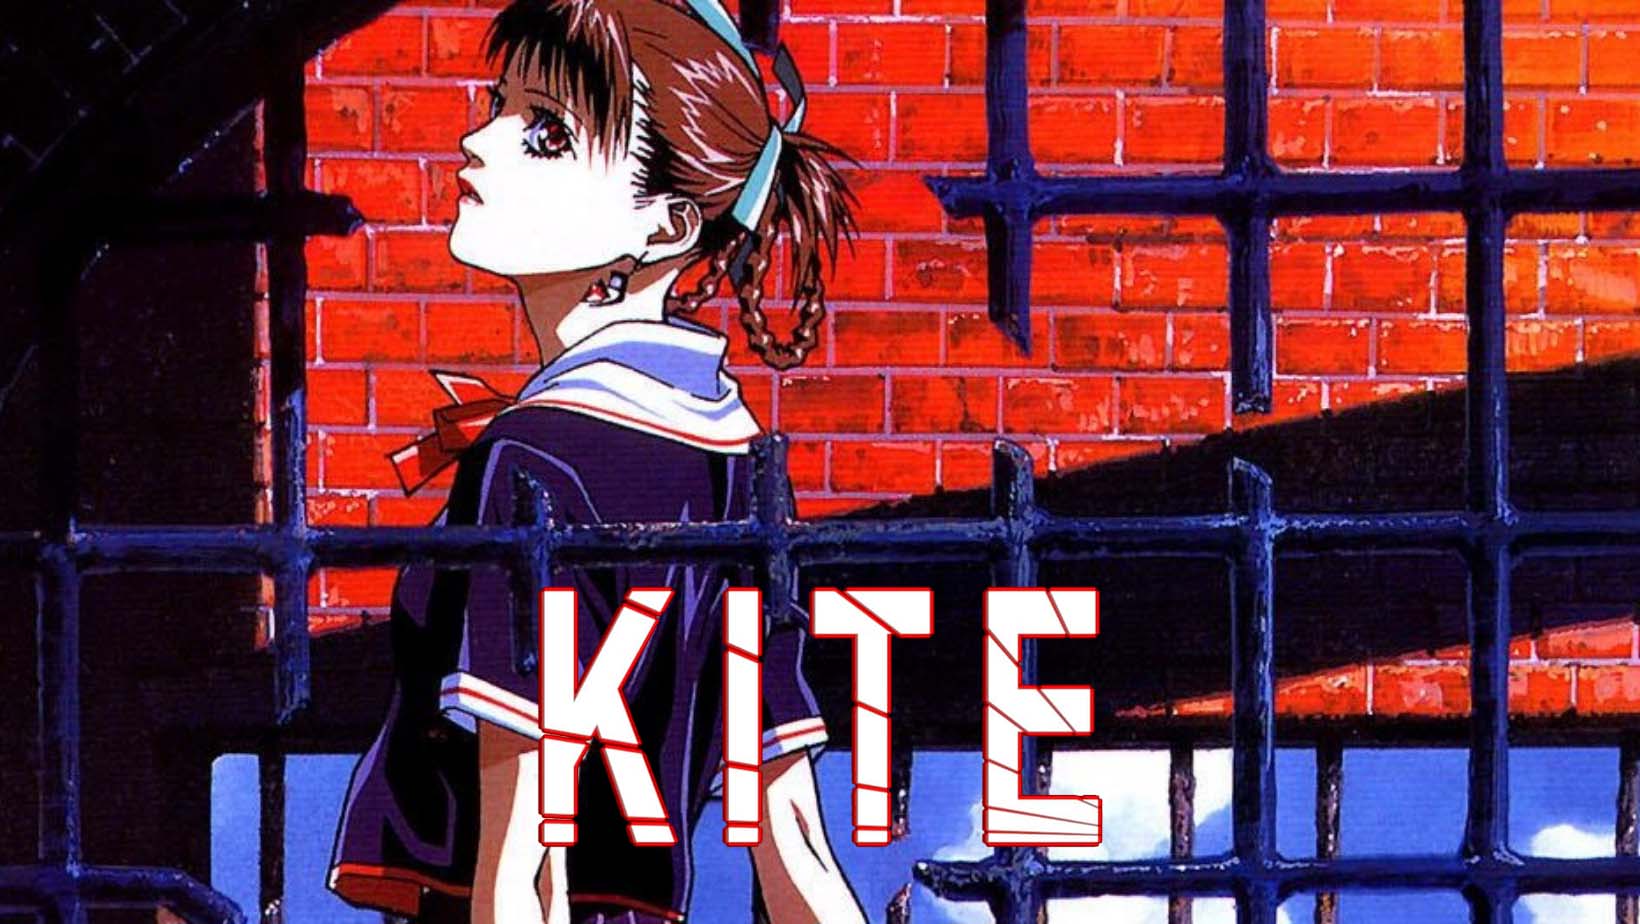 A Kite (1998) NSFW Anime Review - Film Noir Action